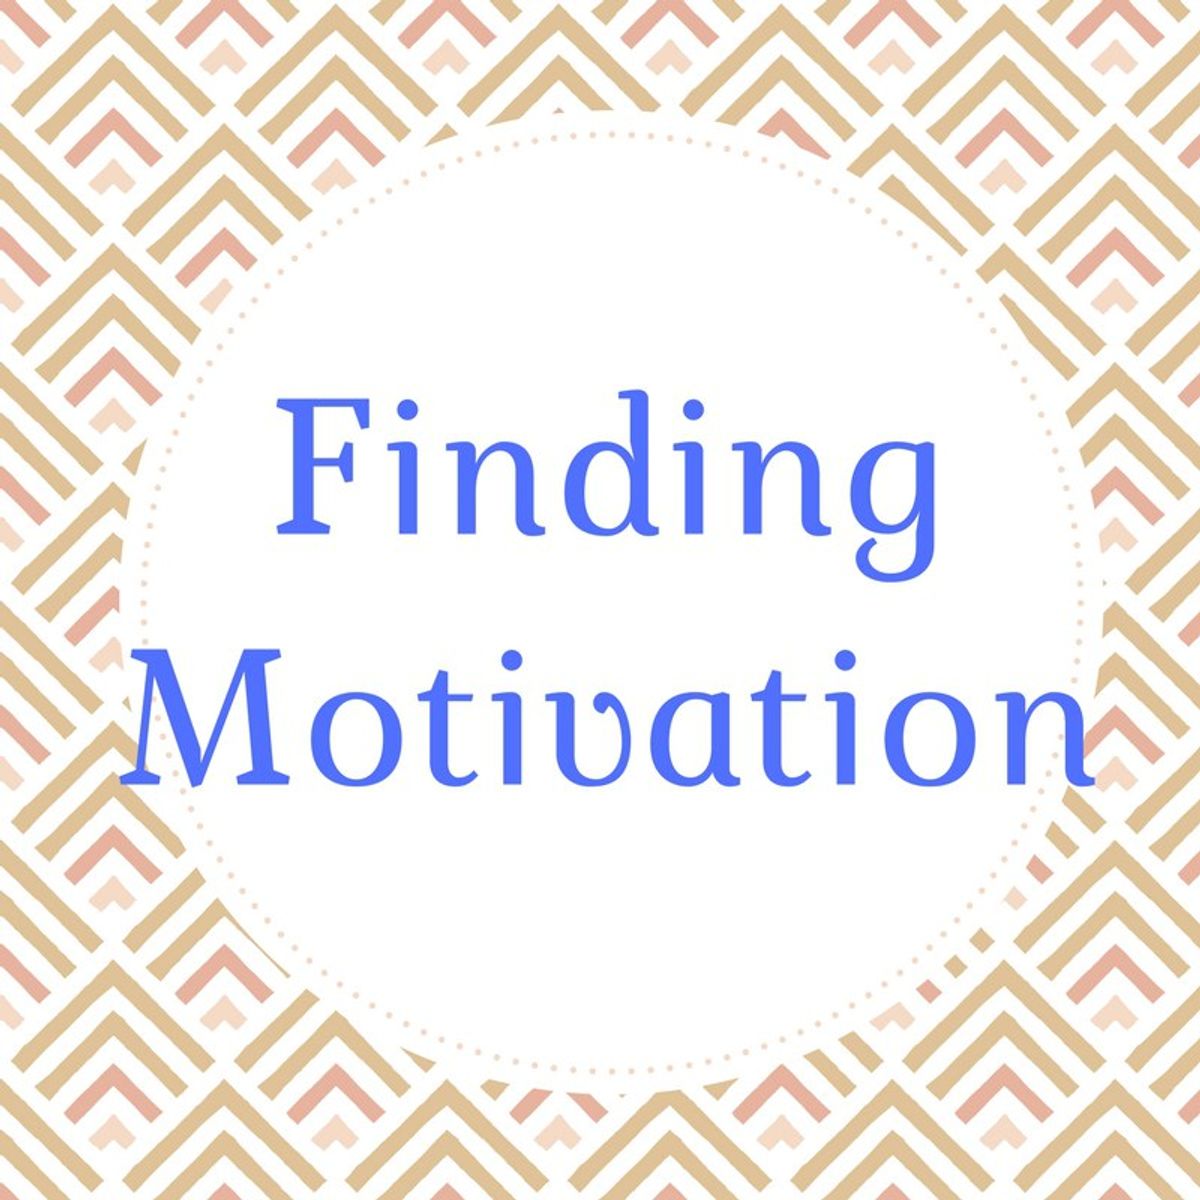 Finding Motivation